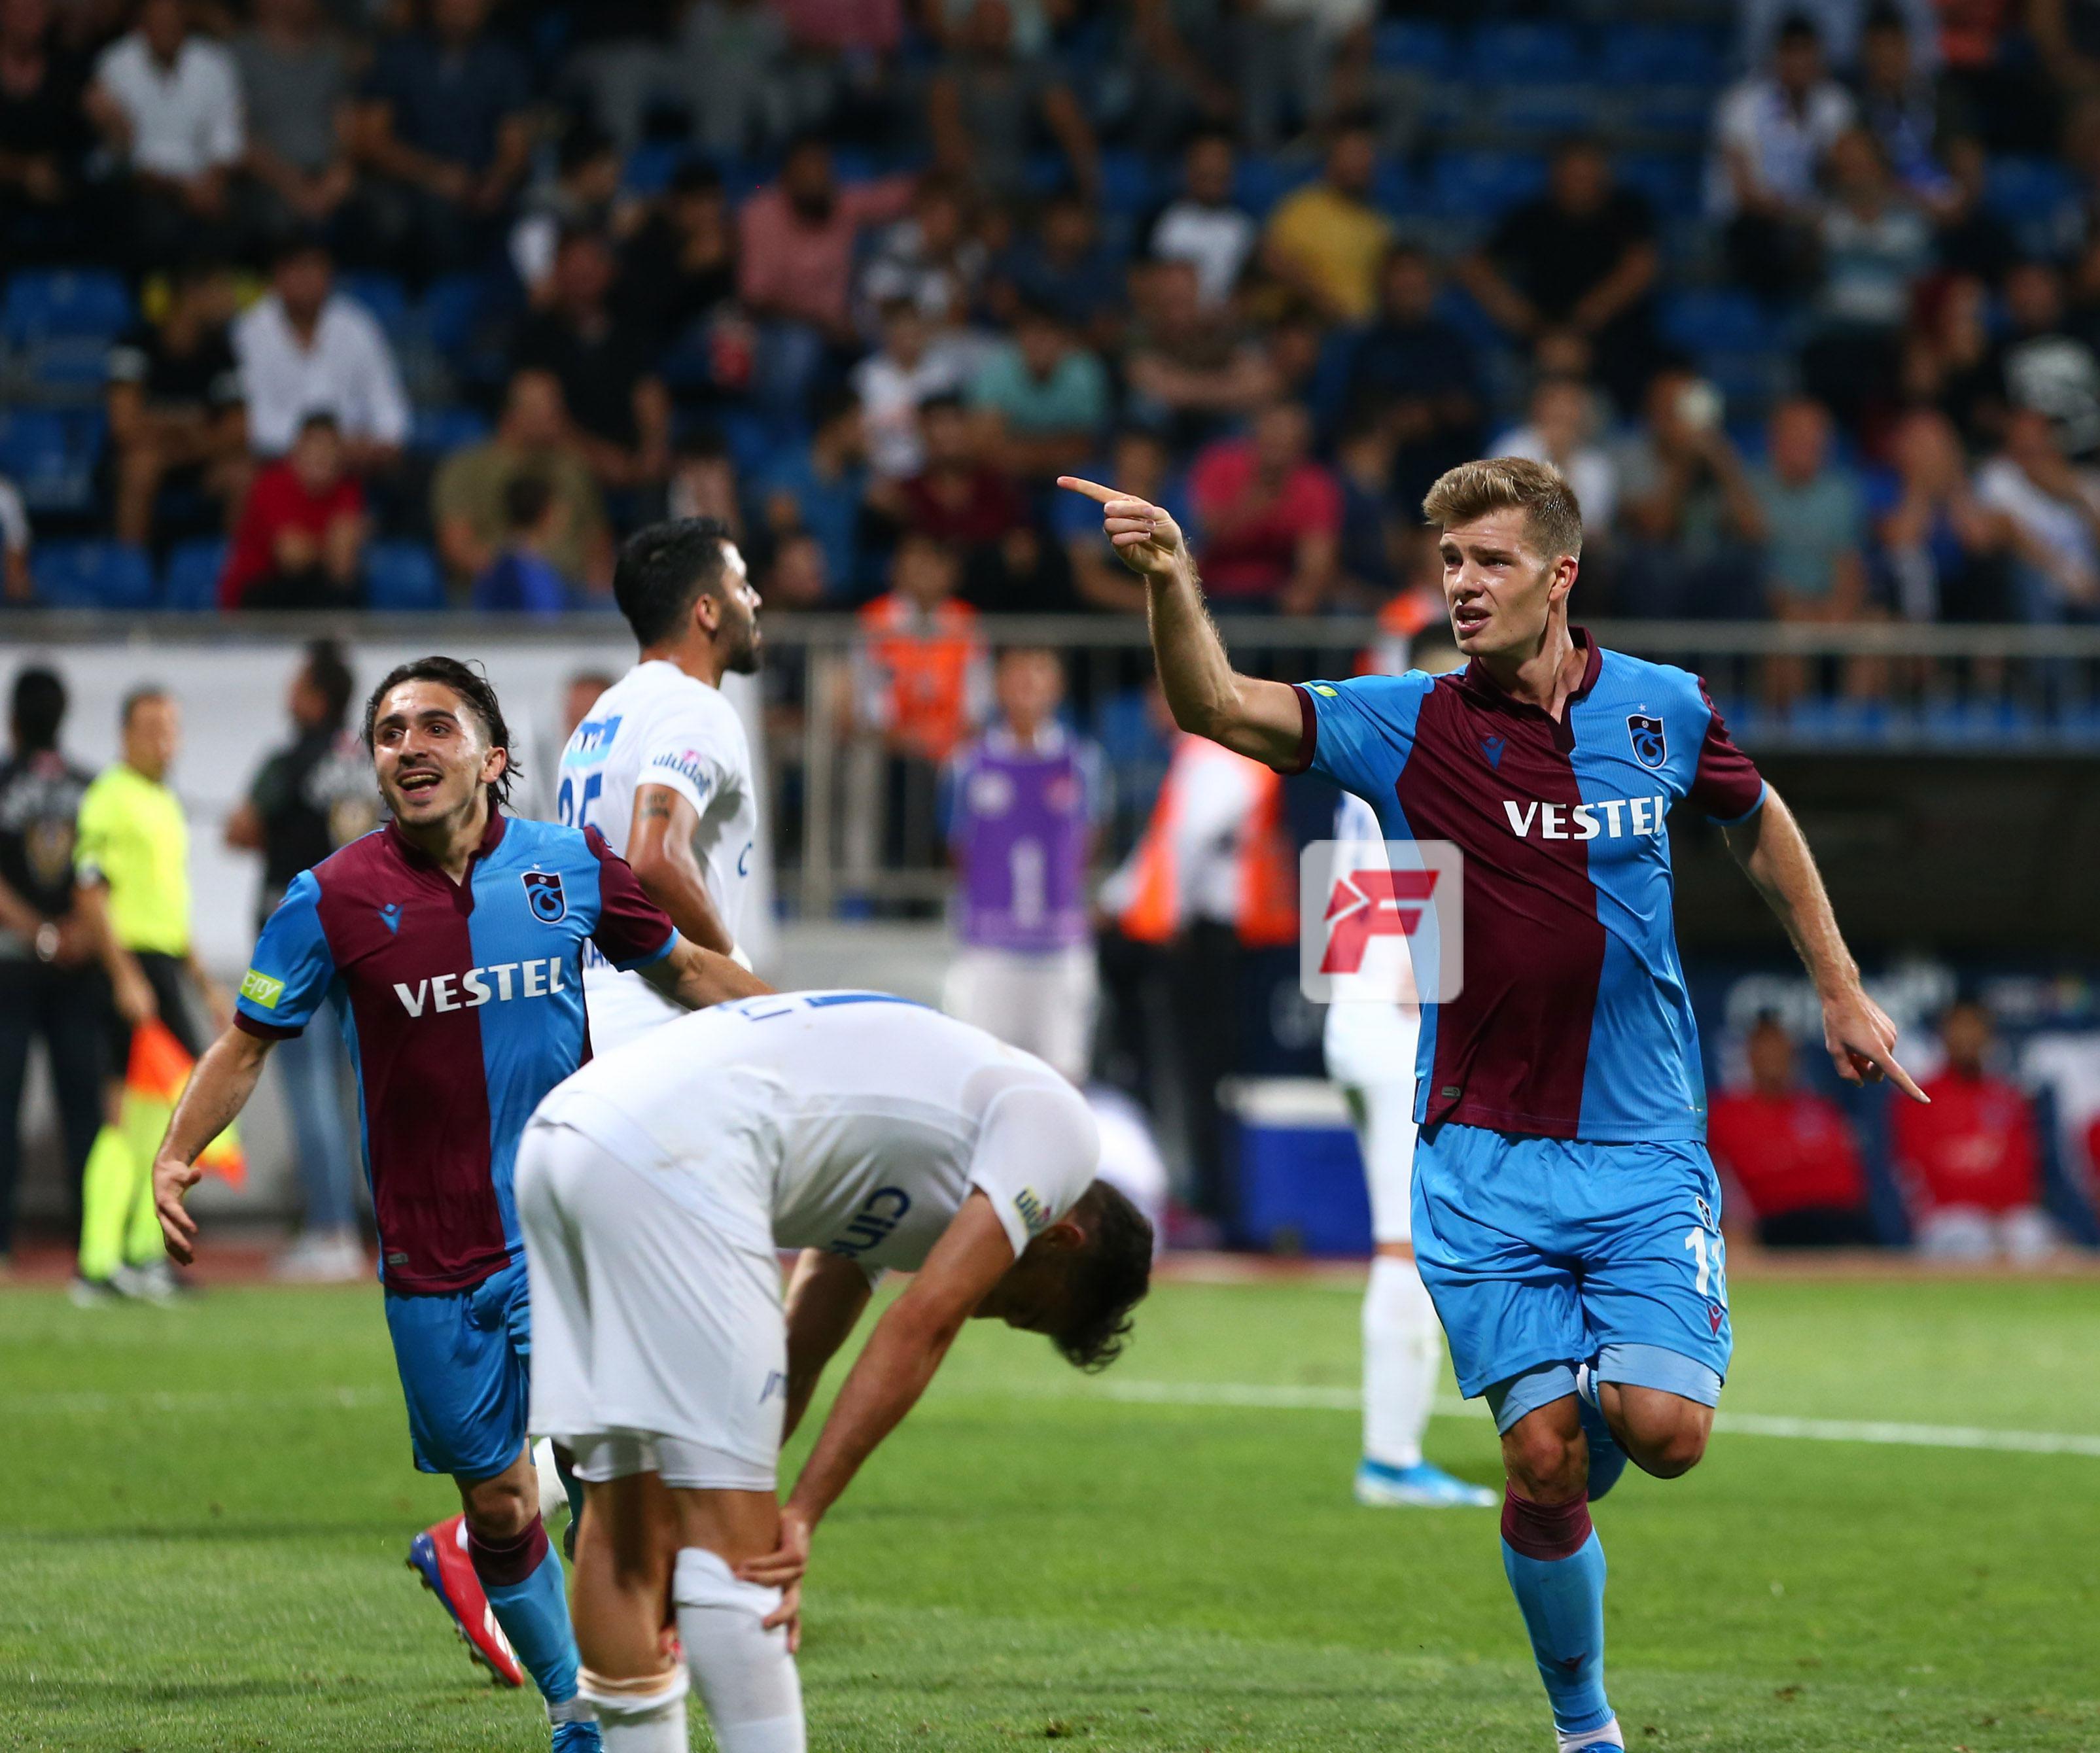 (ÖZET) Kasımpaşa - Trabzonspor maç sonucu: 1-1